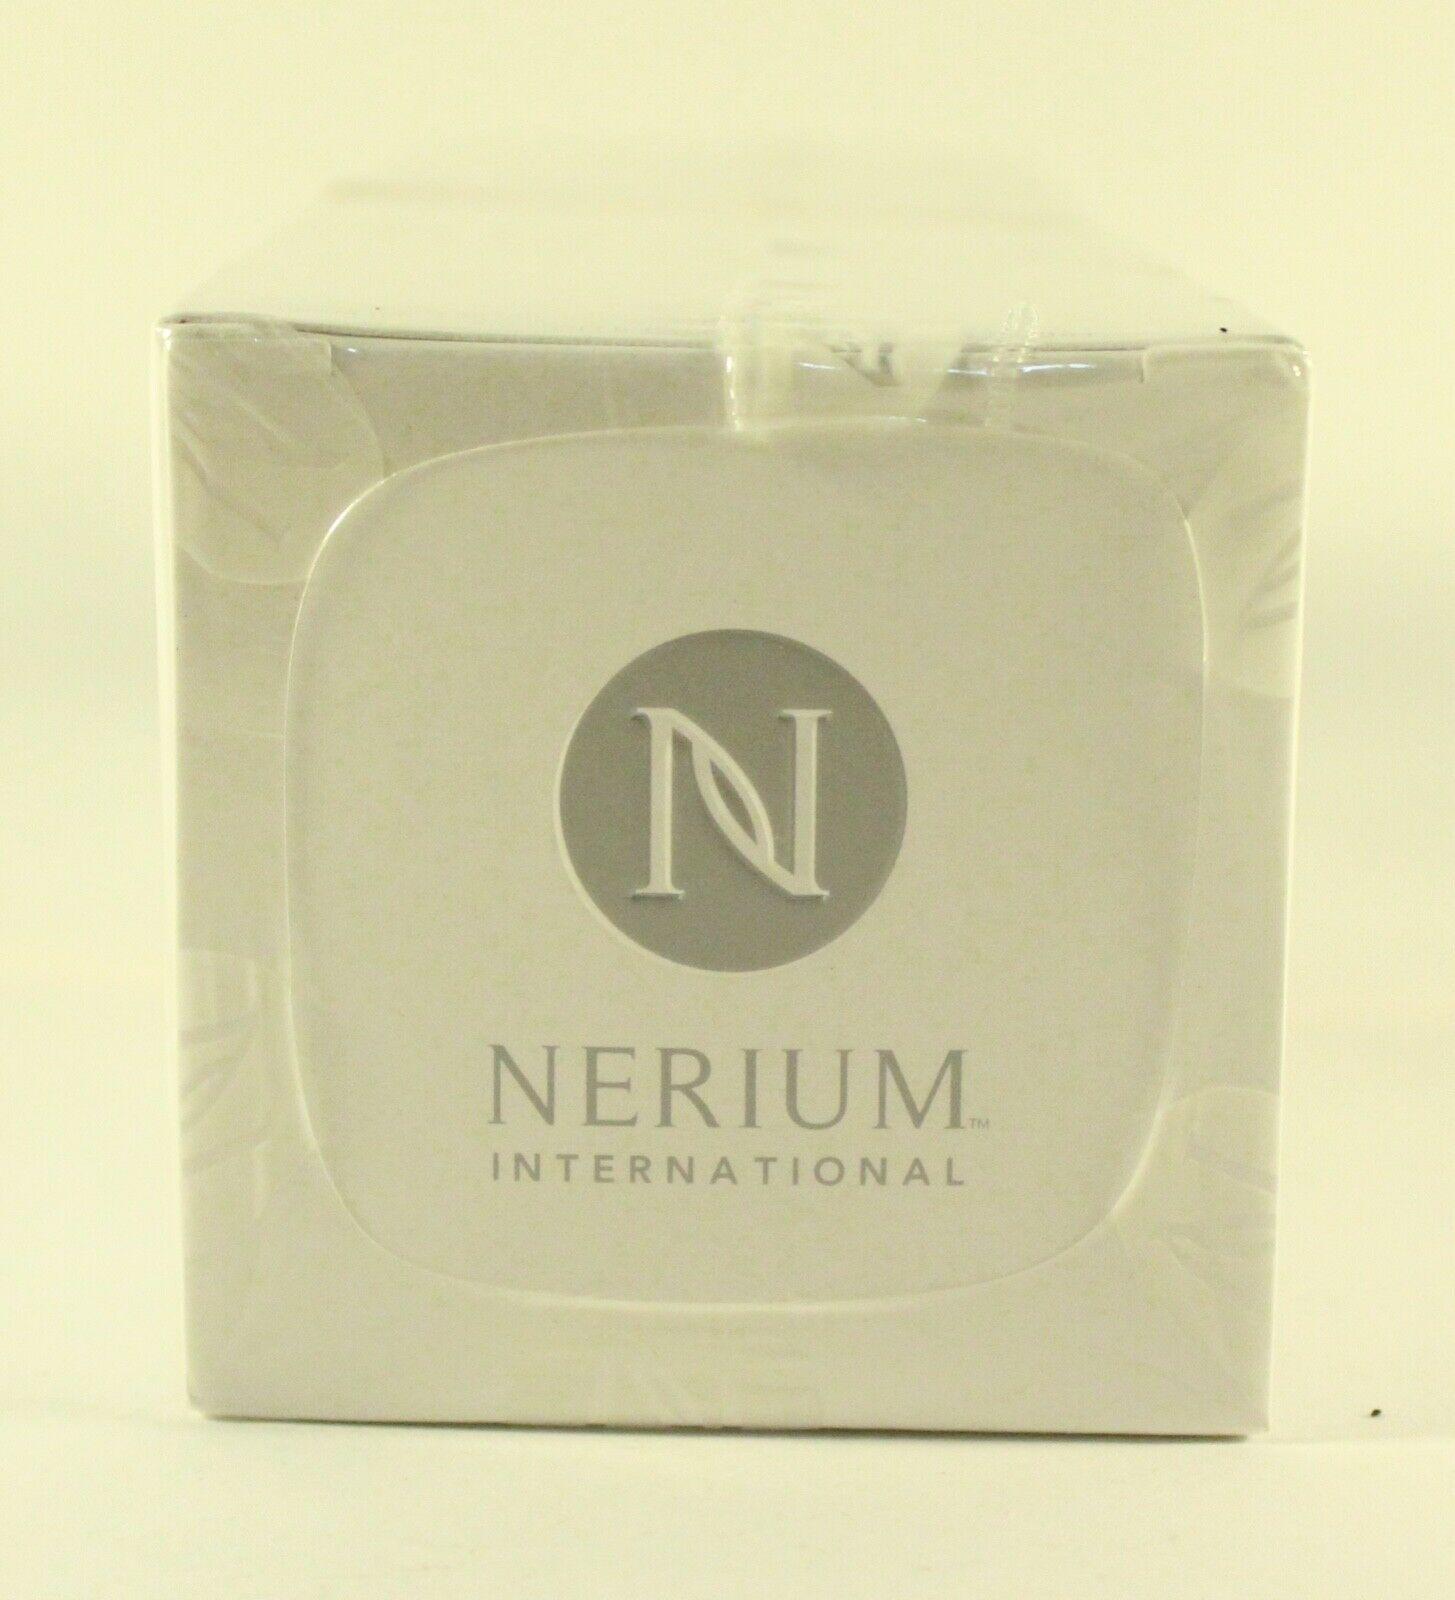 Nerium Logo - Nerium International Firming Body Contour Cream 6.7 Oz 200ml